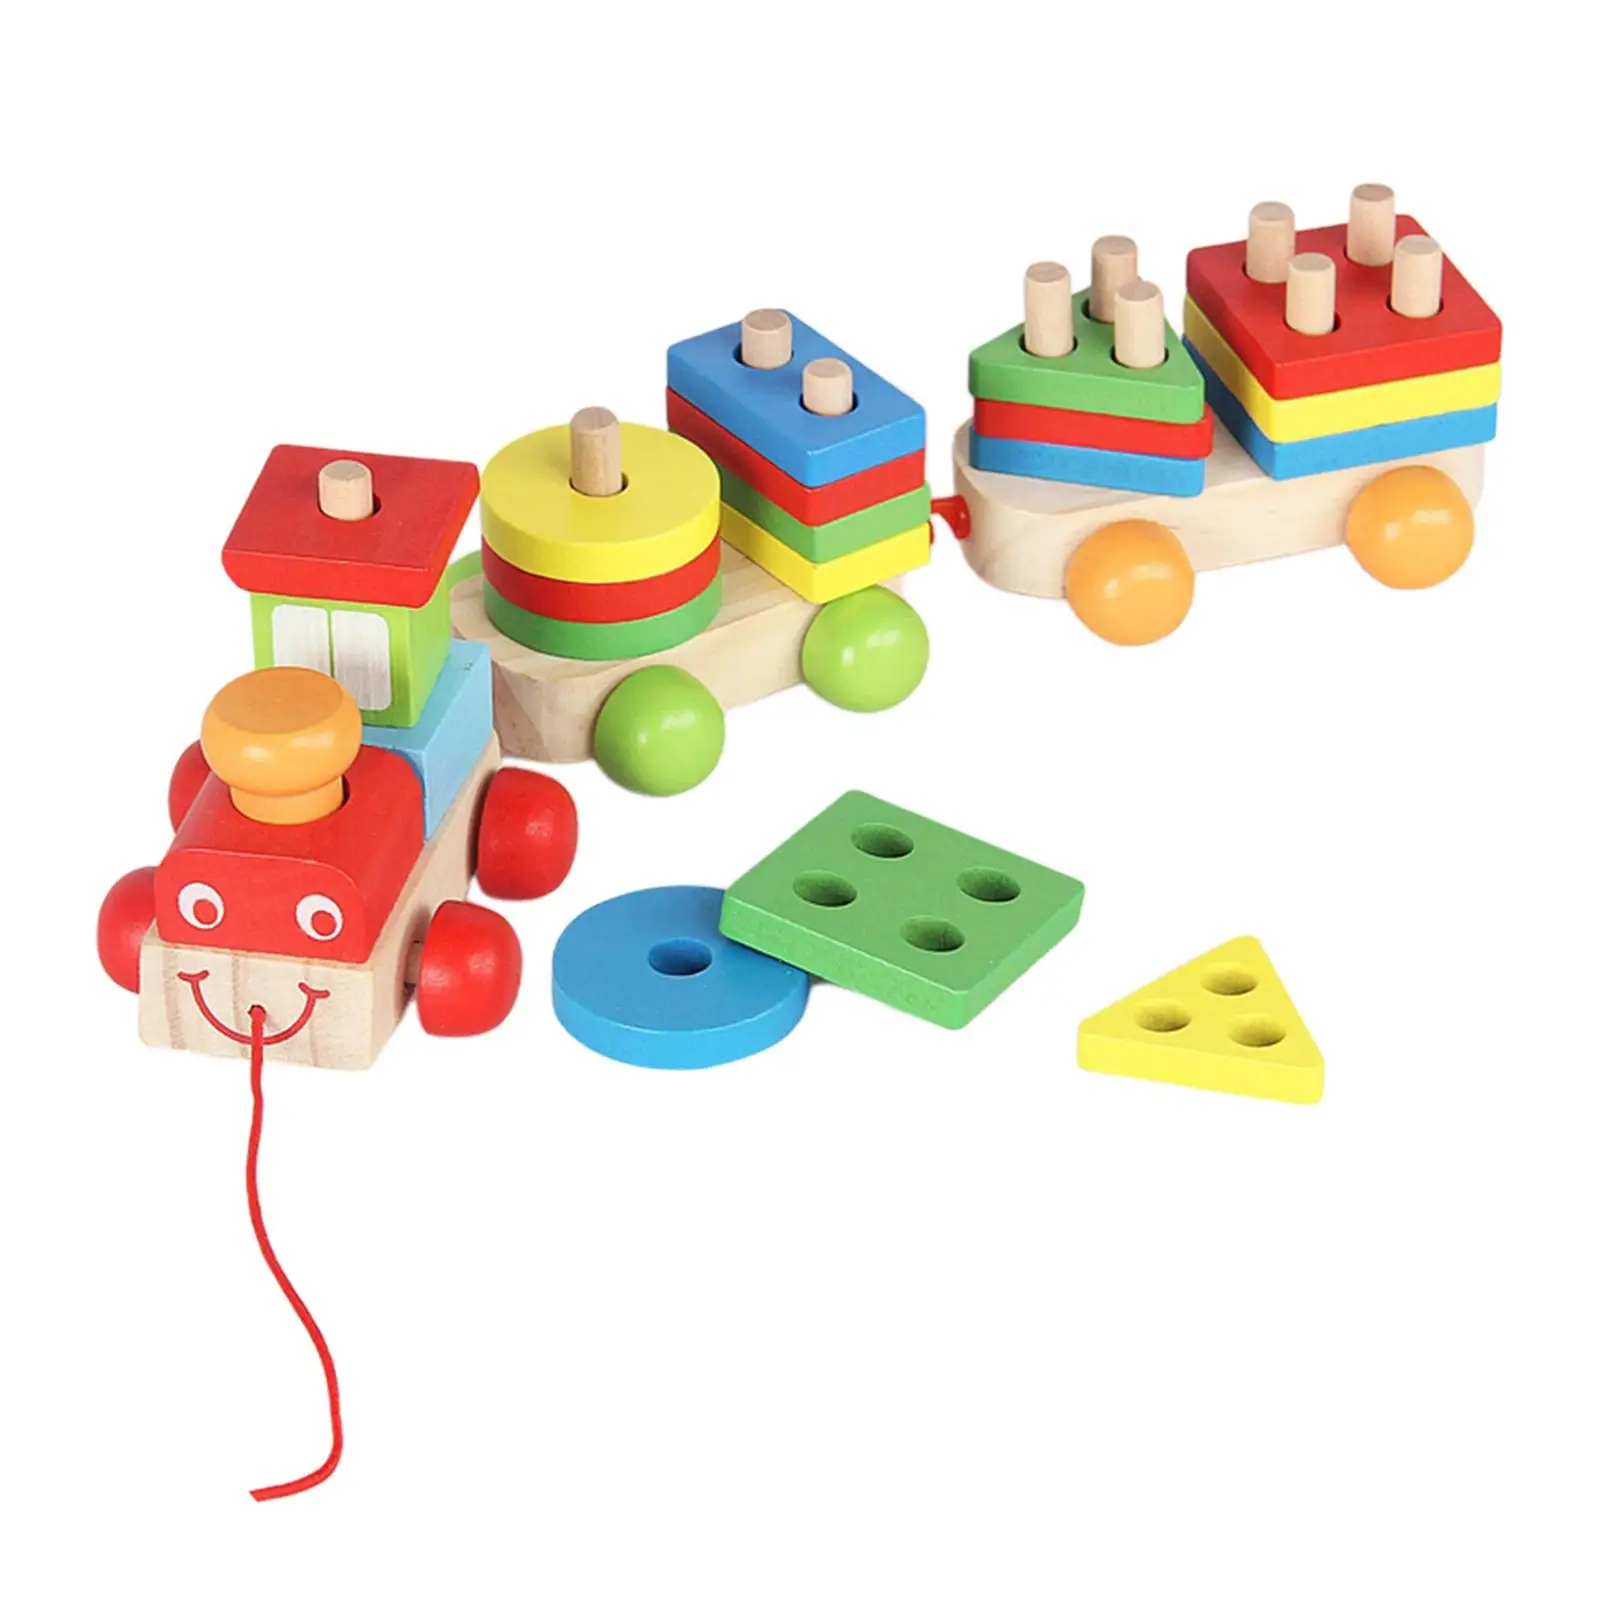 Wooden Matching Toy Fine Motor Skills Developmental Toy Matching Puzzle Stacker for Children Girls Kids Preschool Holiday Gifts